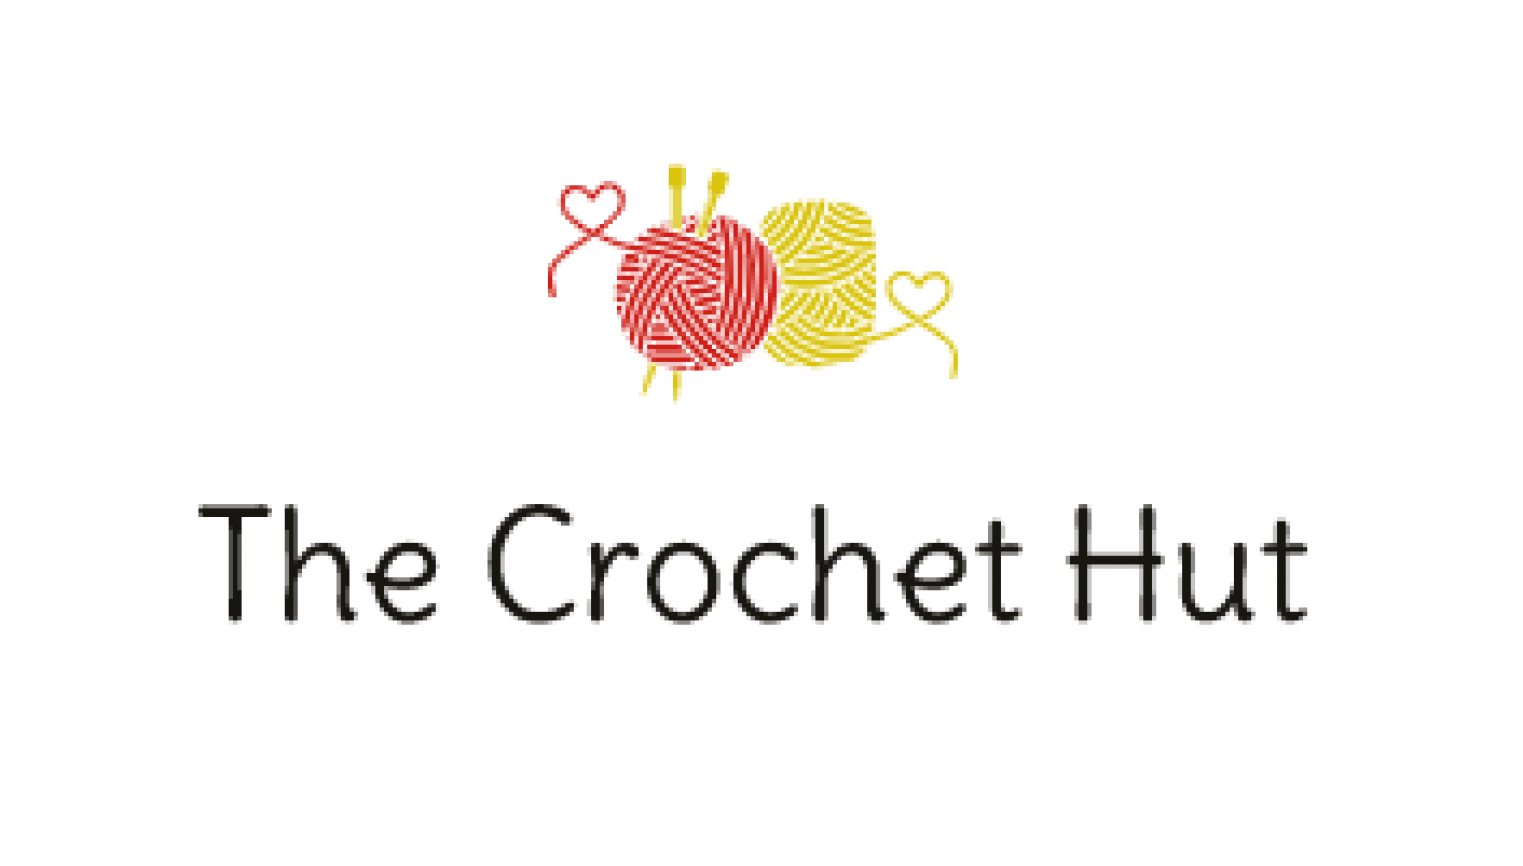 The crochet hut - foto 1/2